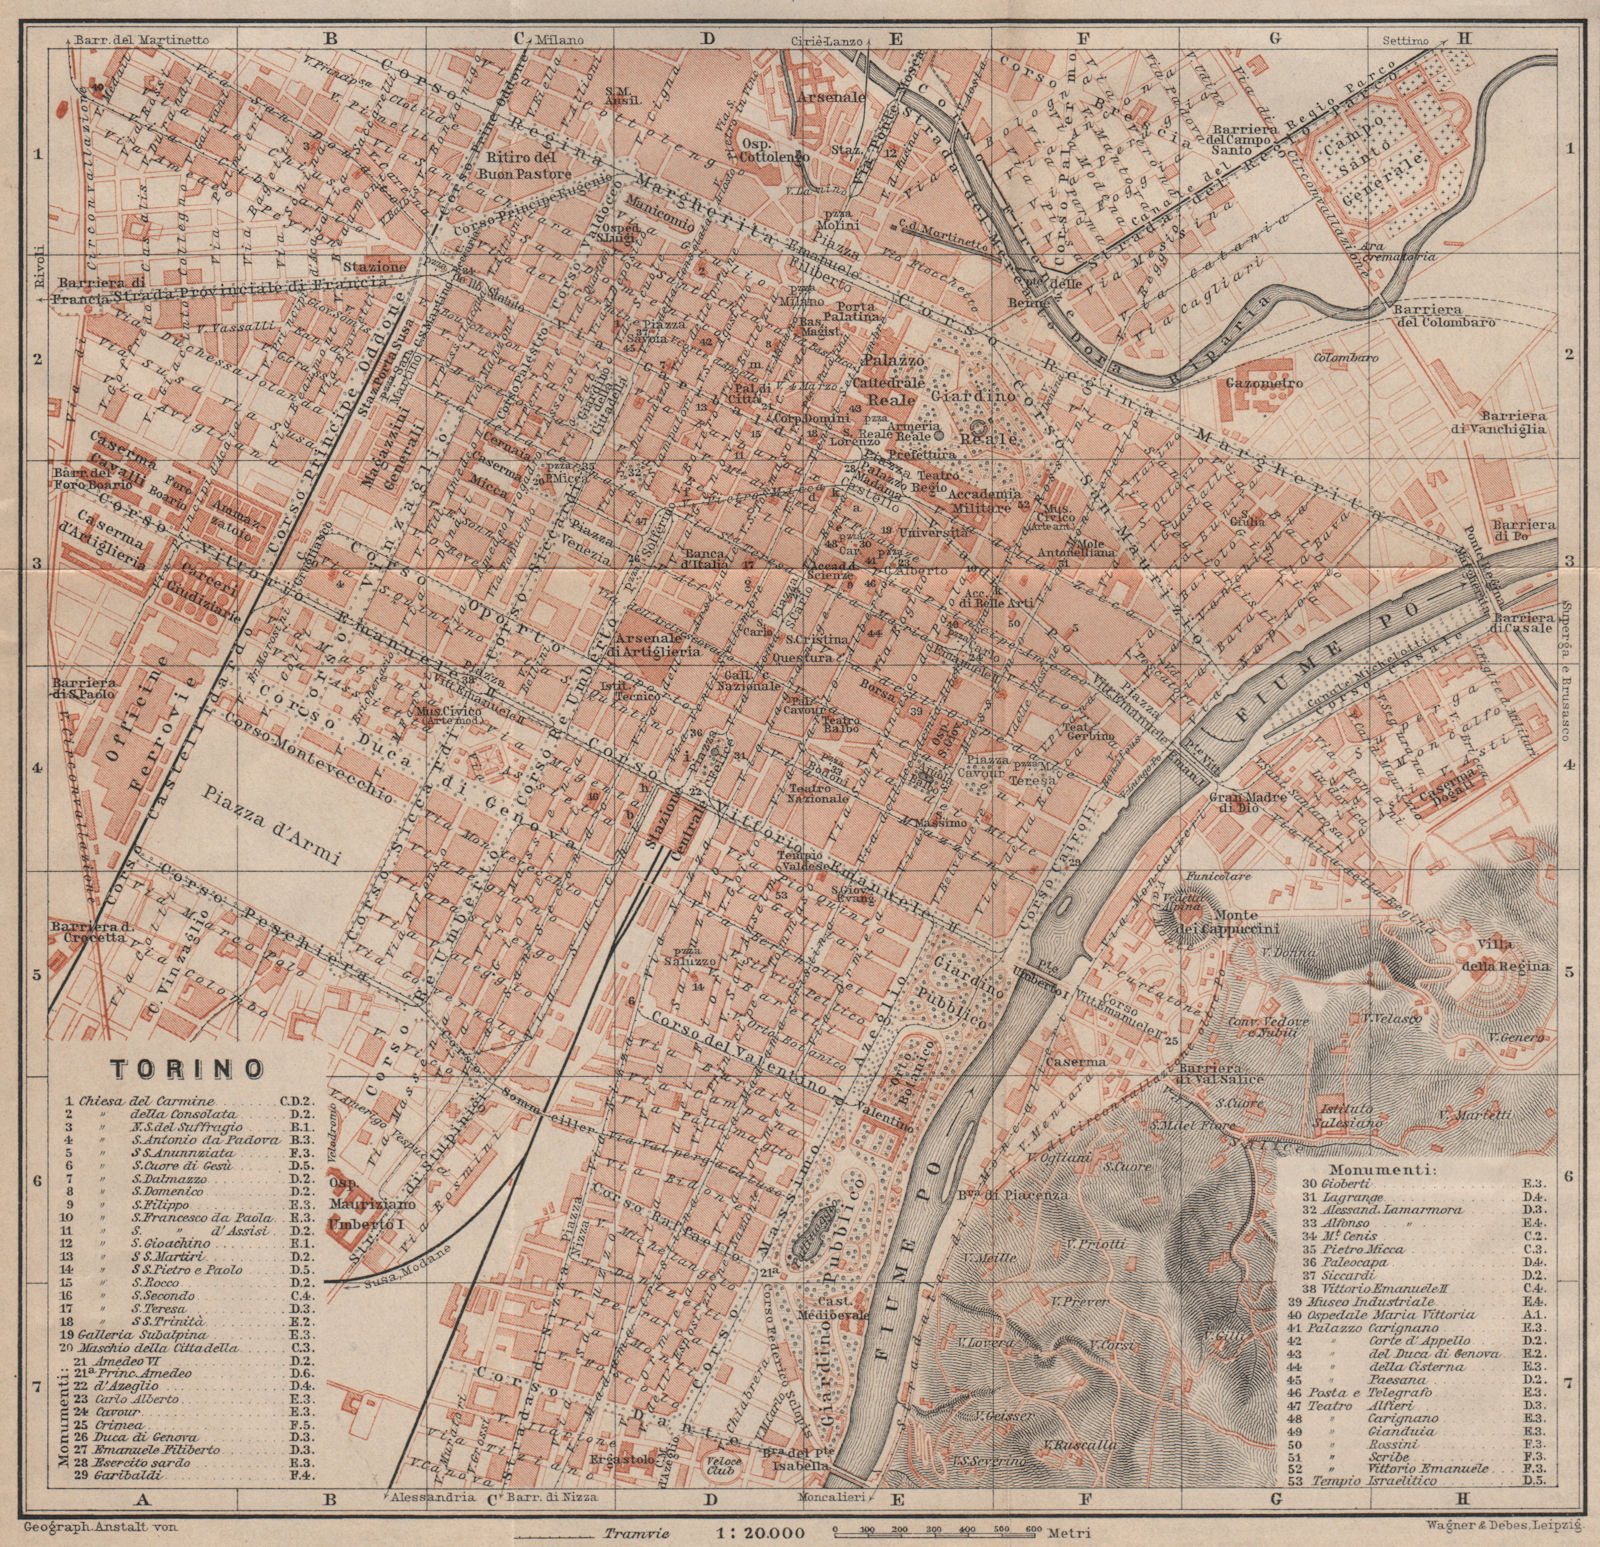 TORINO TURIN antique town city plan piano urbanistico. Italy mappa 1903